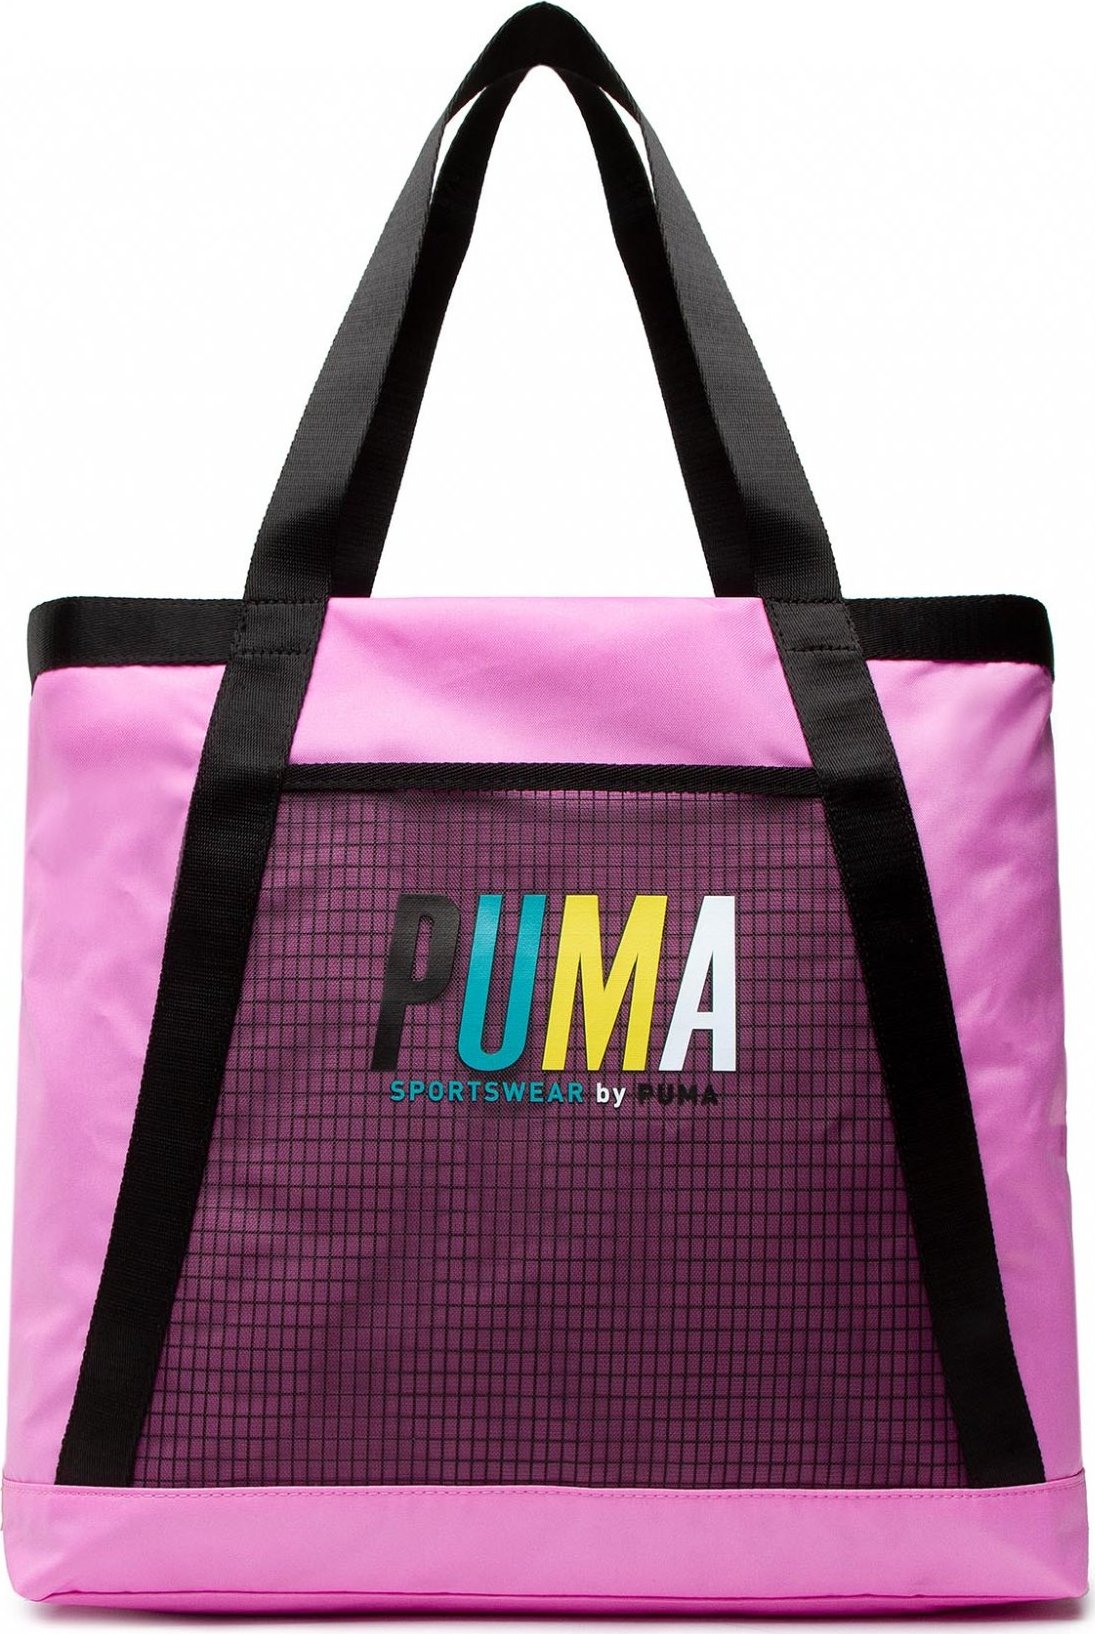 Puma Prime Street Large Shopper 787540 02